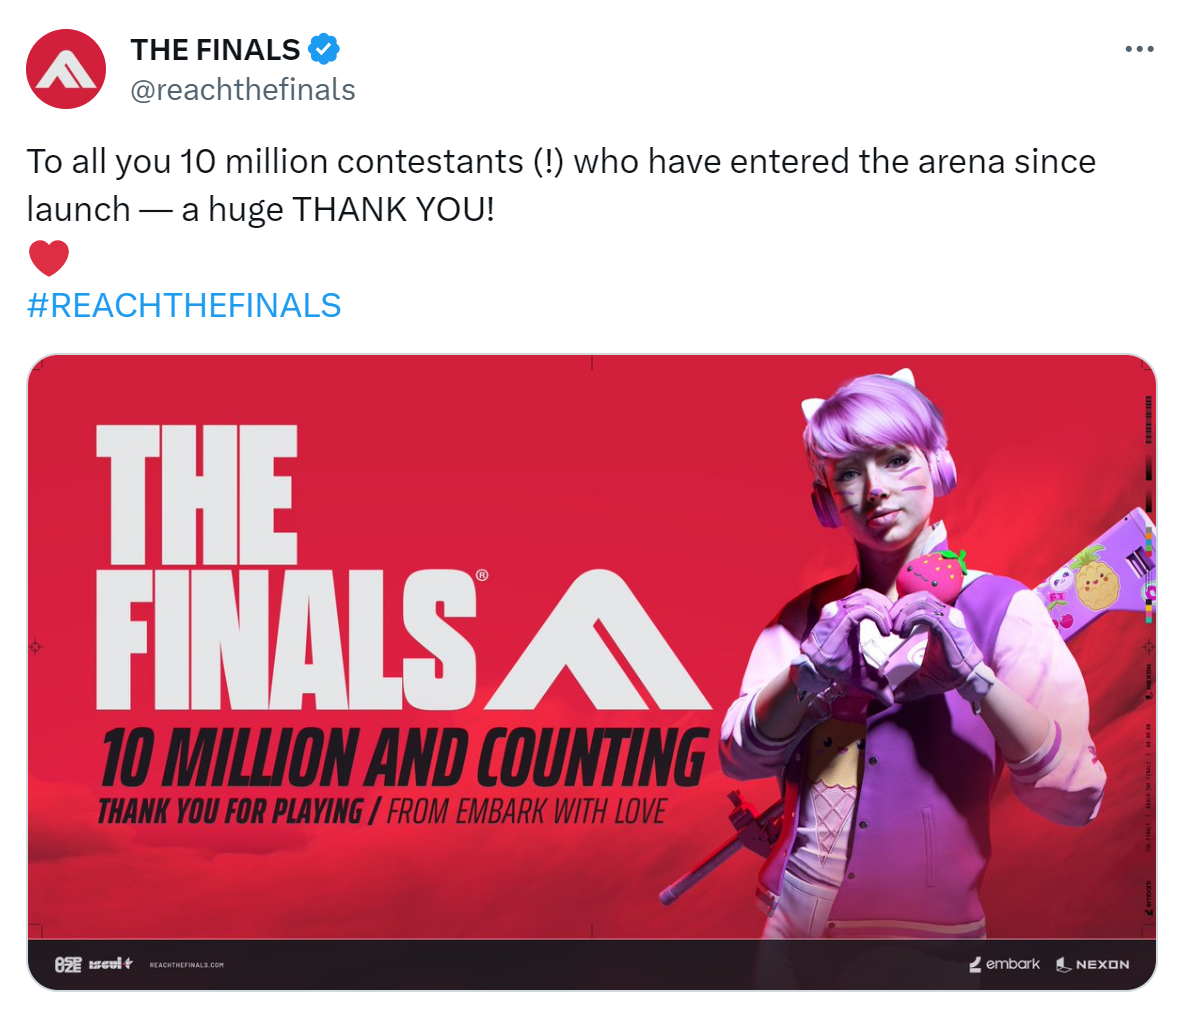 《THE FINALS》玩家人数突破1000万 民间致谢